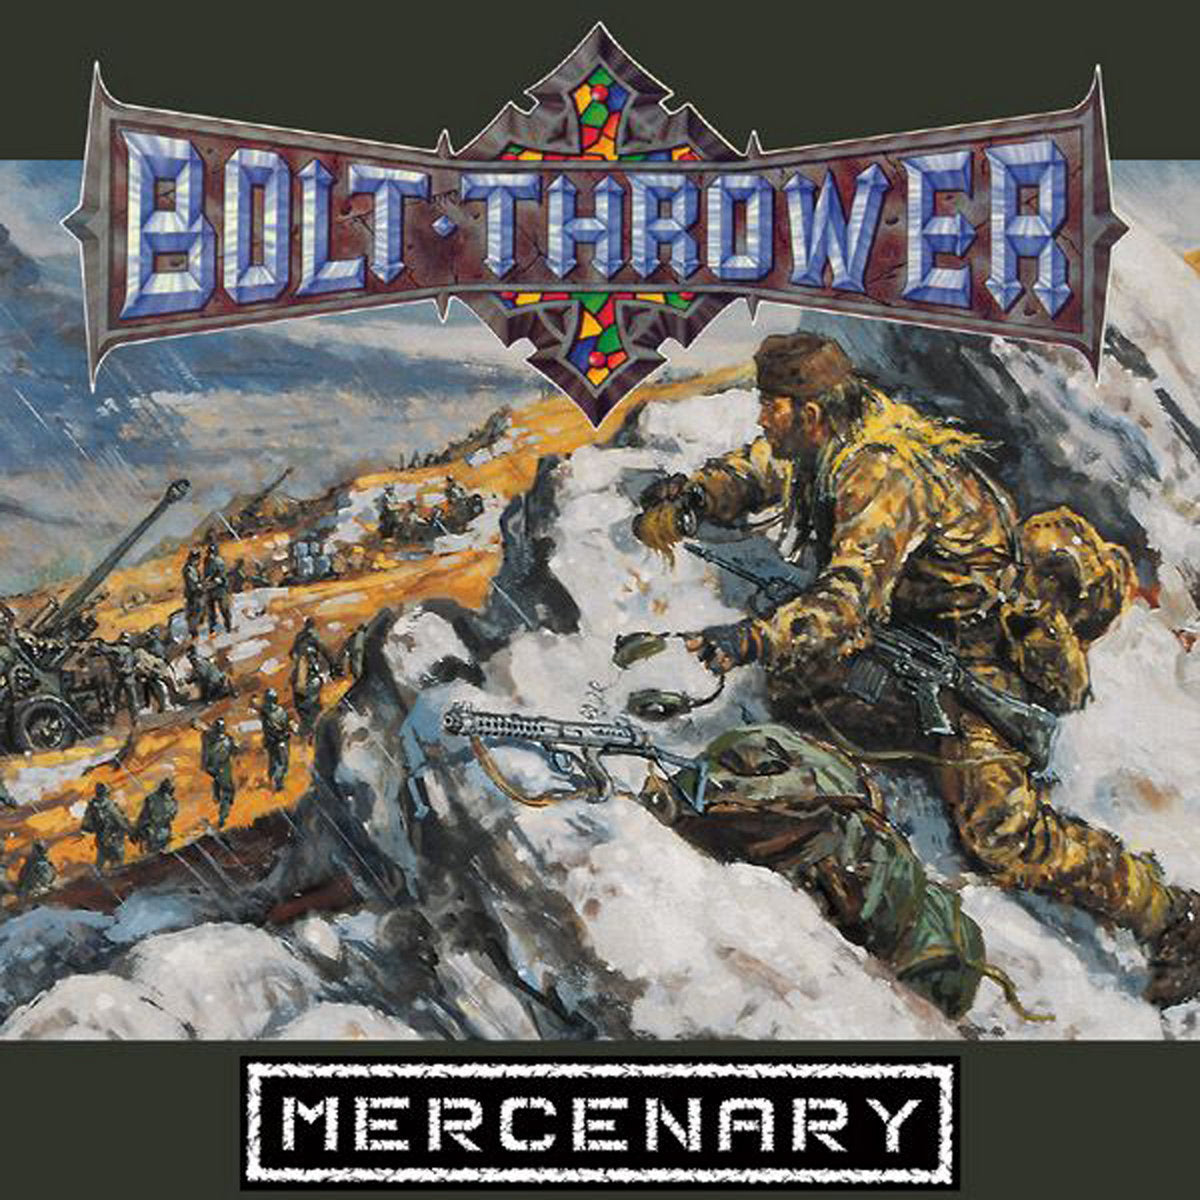 [SOLD OUT] BOLT THROWER "Mercenary" vinyl LP (gatefold, lim. 500 w/ giant poster)